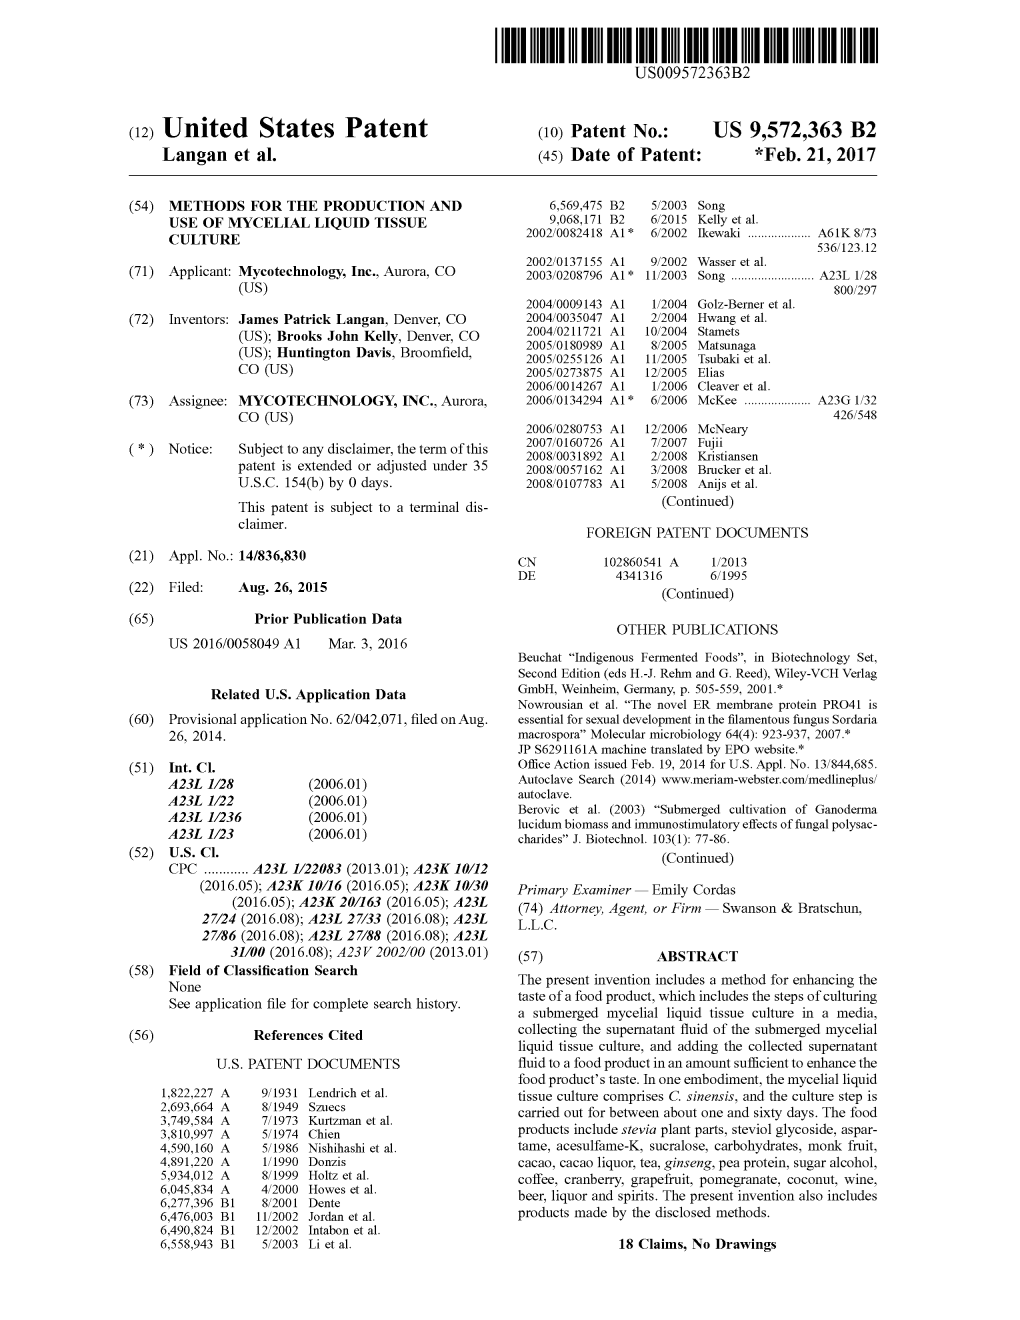 United States Patent (10) Patent No.: US 9,572,363 B2 Langan Et Al